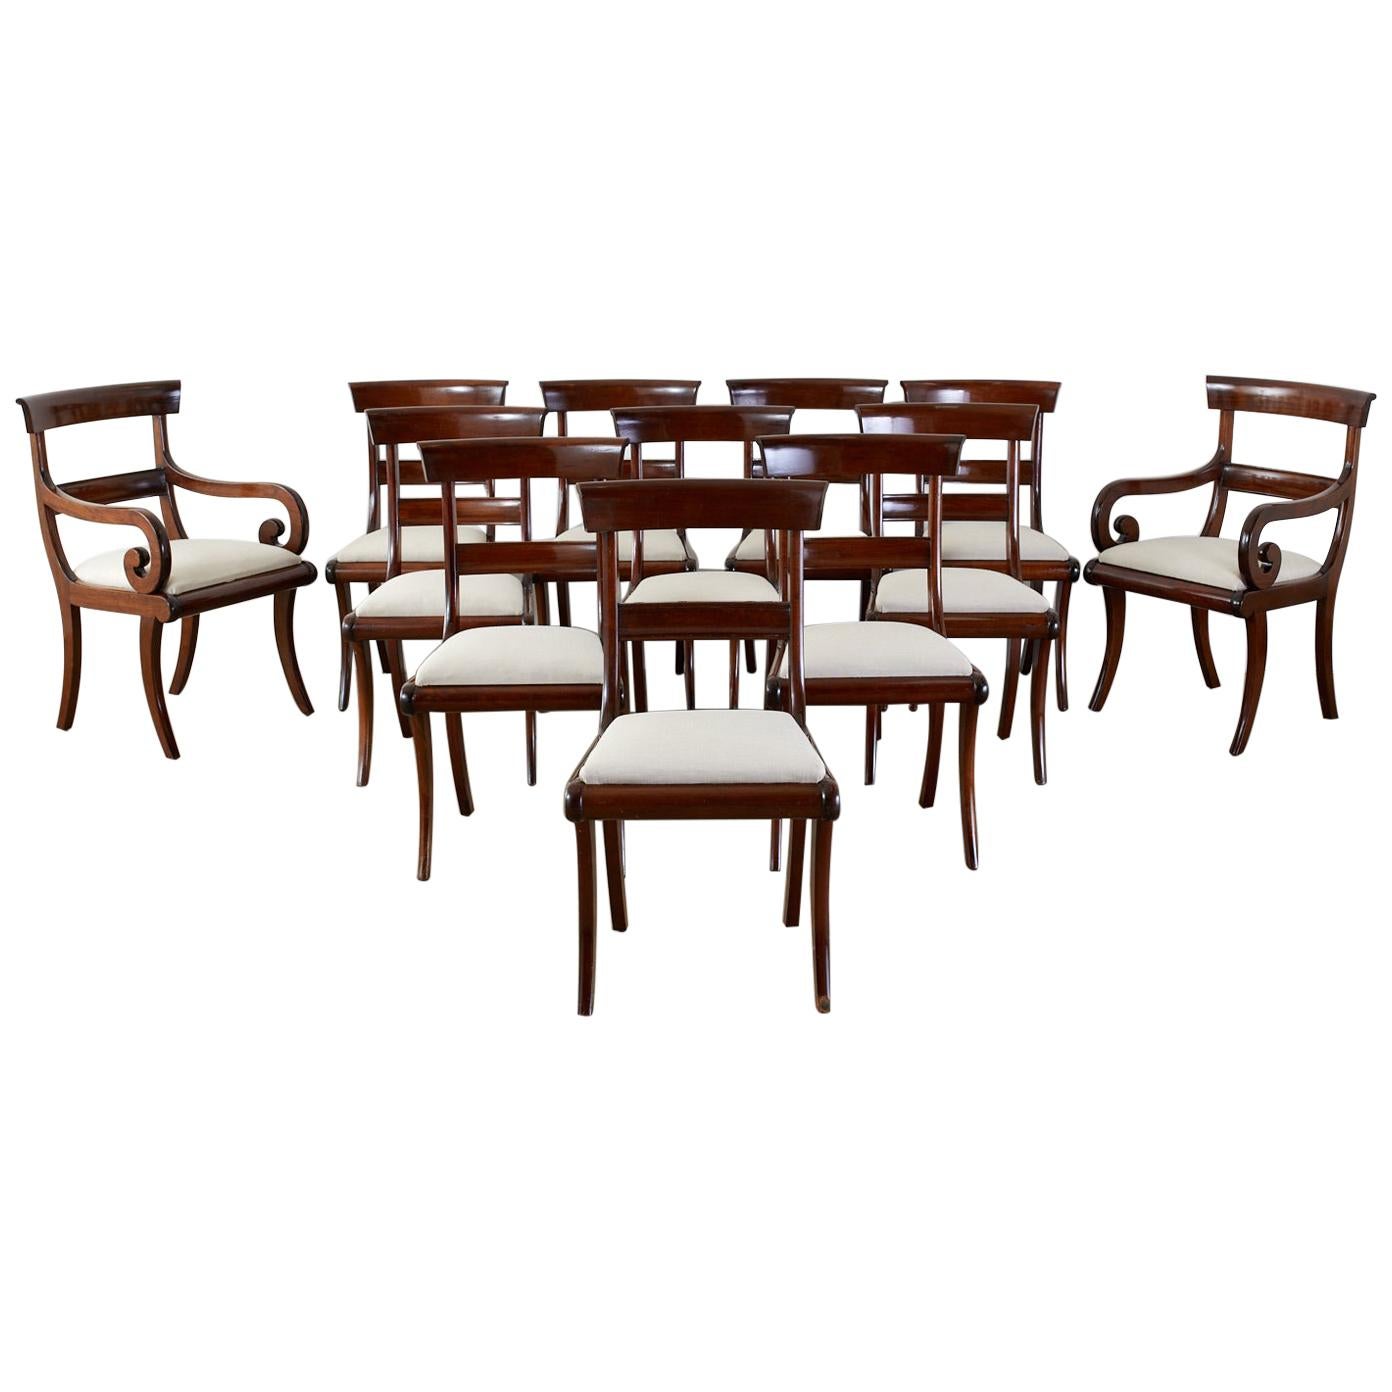 Set of Twelve English Regency Mahogany Dining Chairs